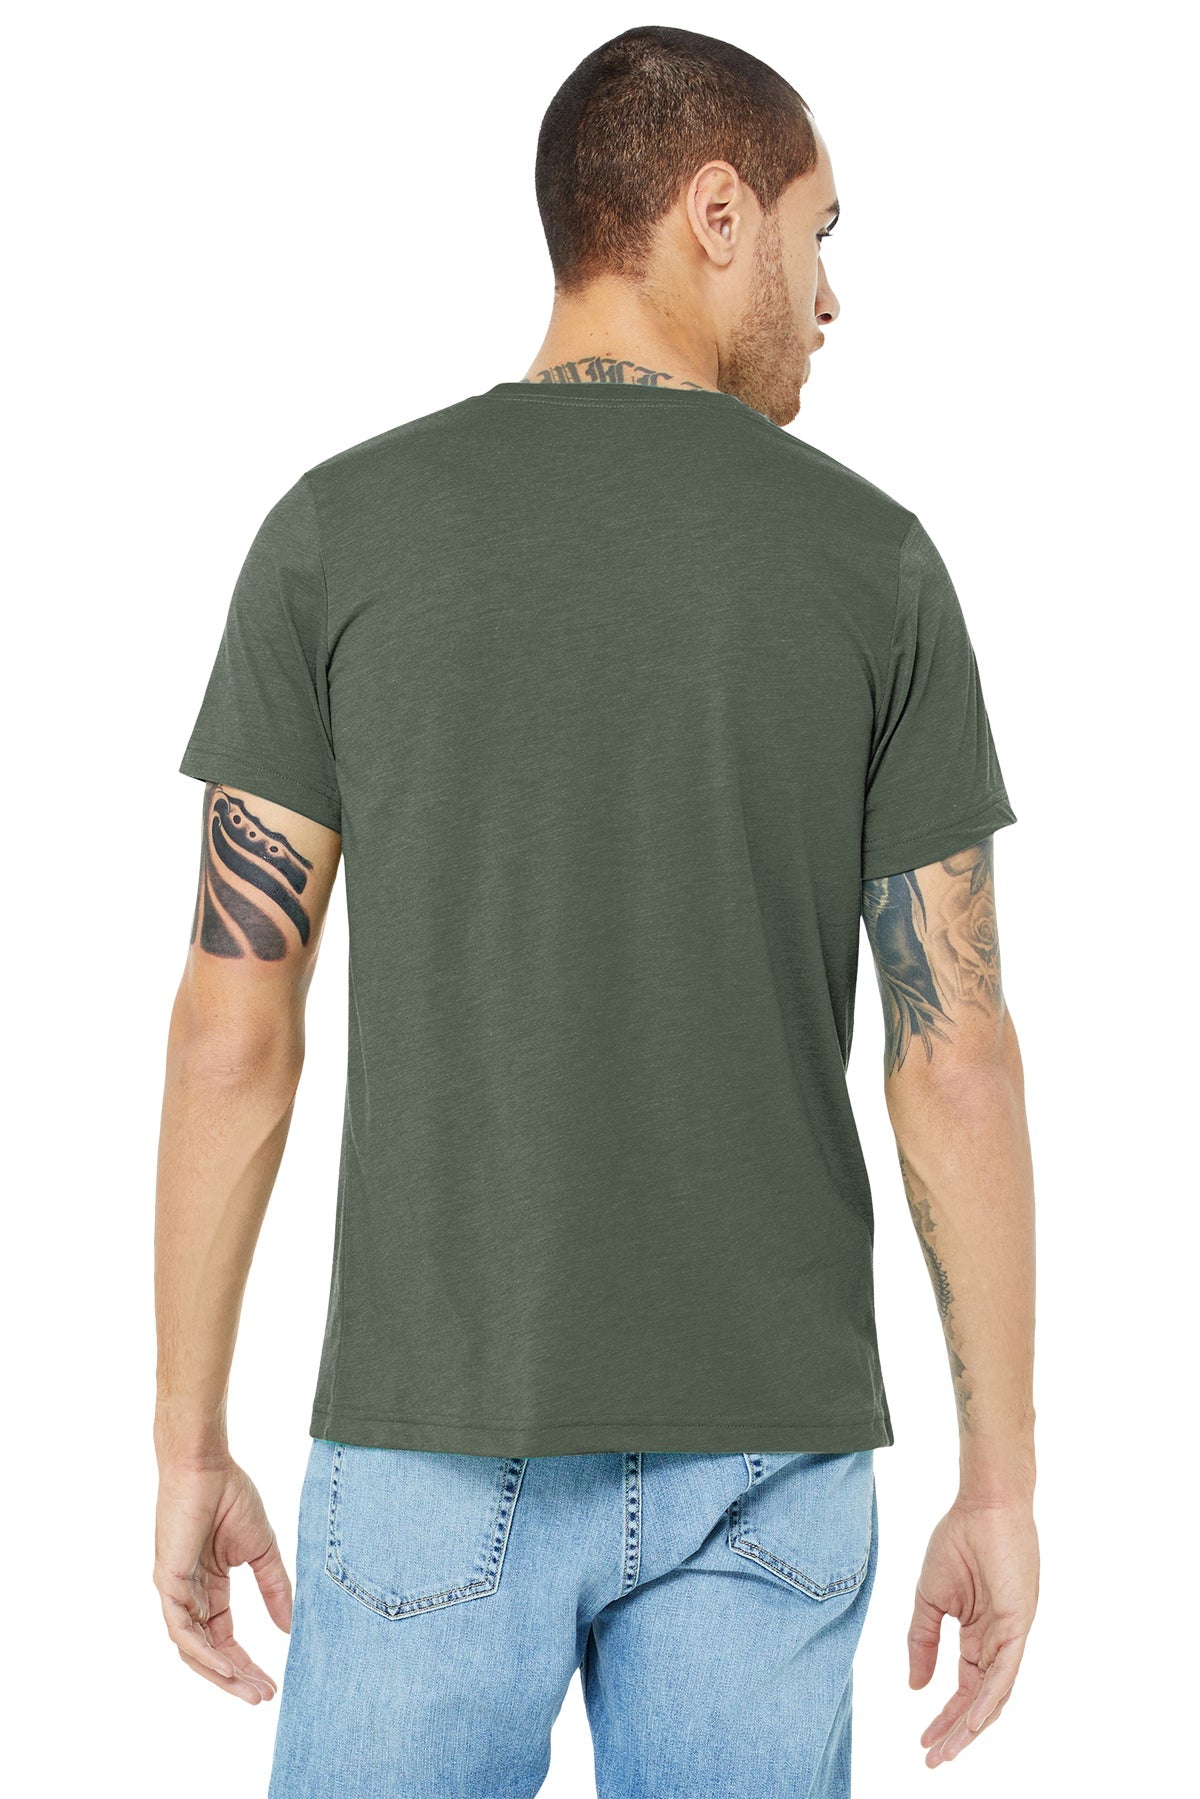 bella + canvas unisex triblend short sleeve t-shirt 3413c mltry grn trblnd